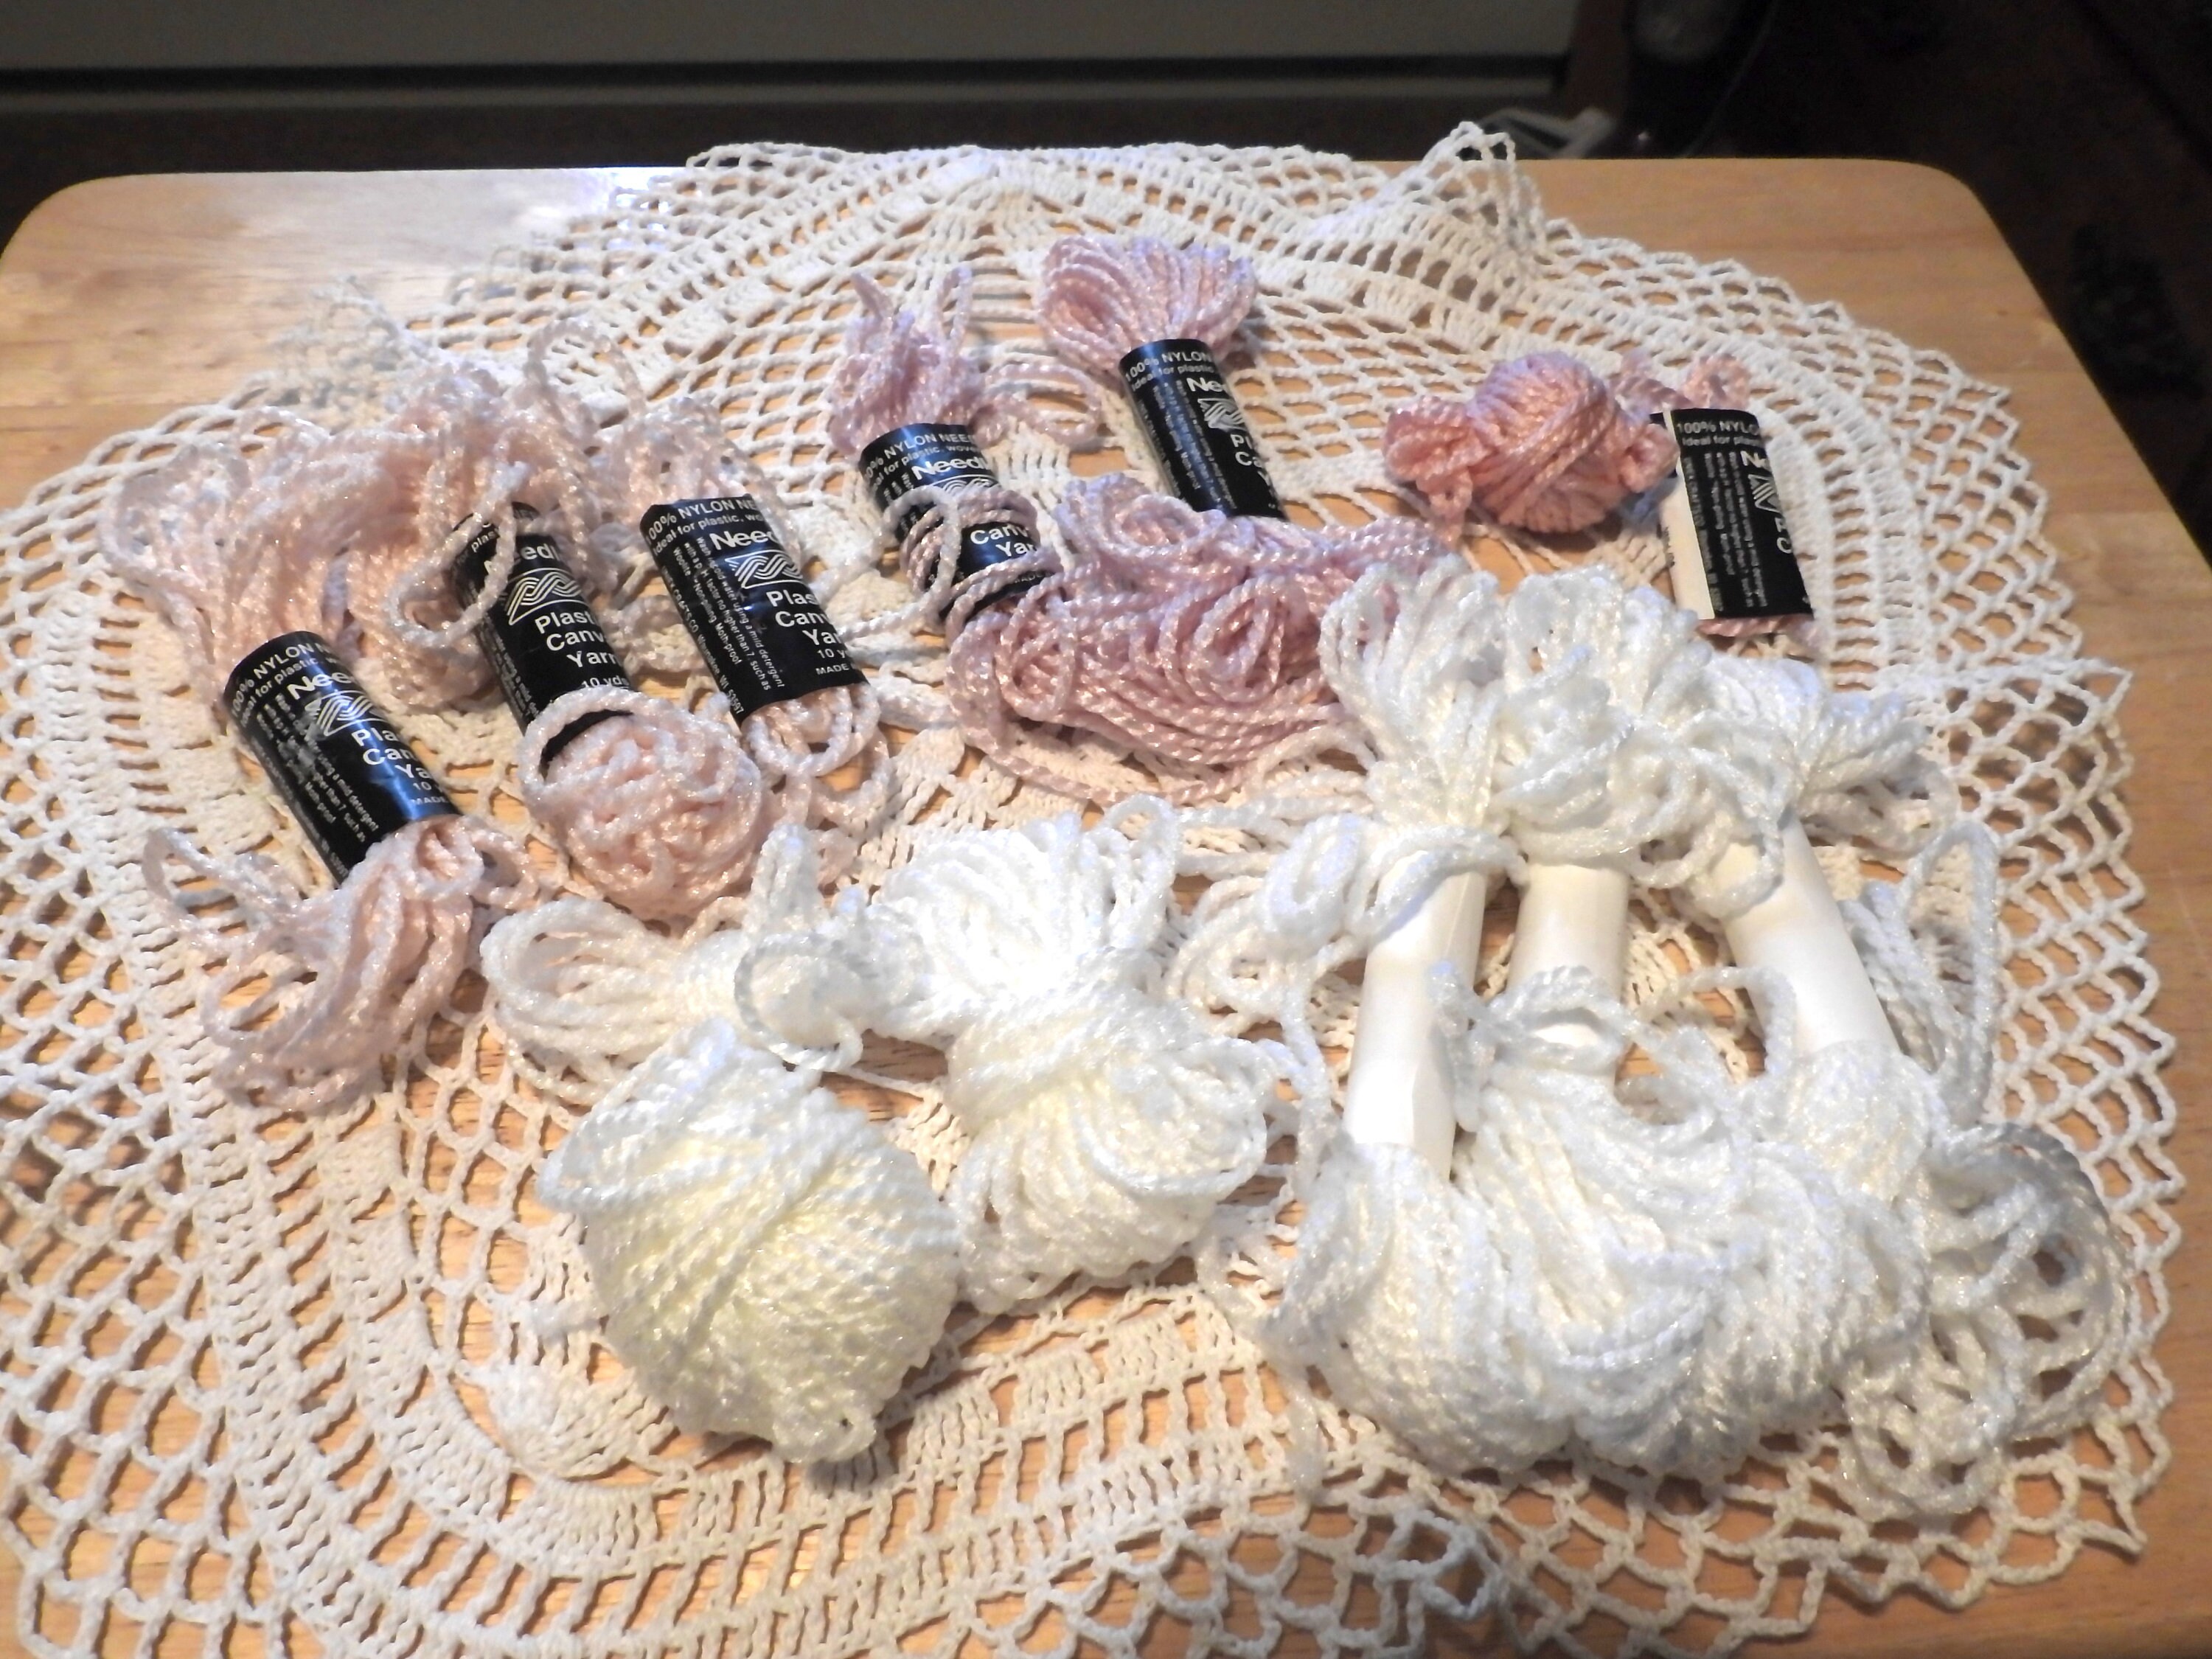 27colors 125g High Quality Crochet Nylon Yarn for DIY Handmade Crafts Home  Decoration 